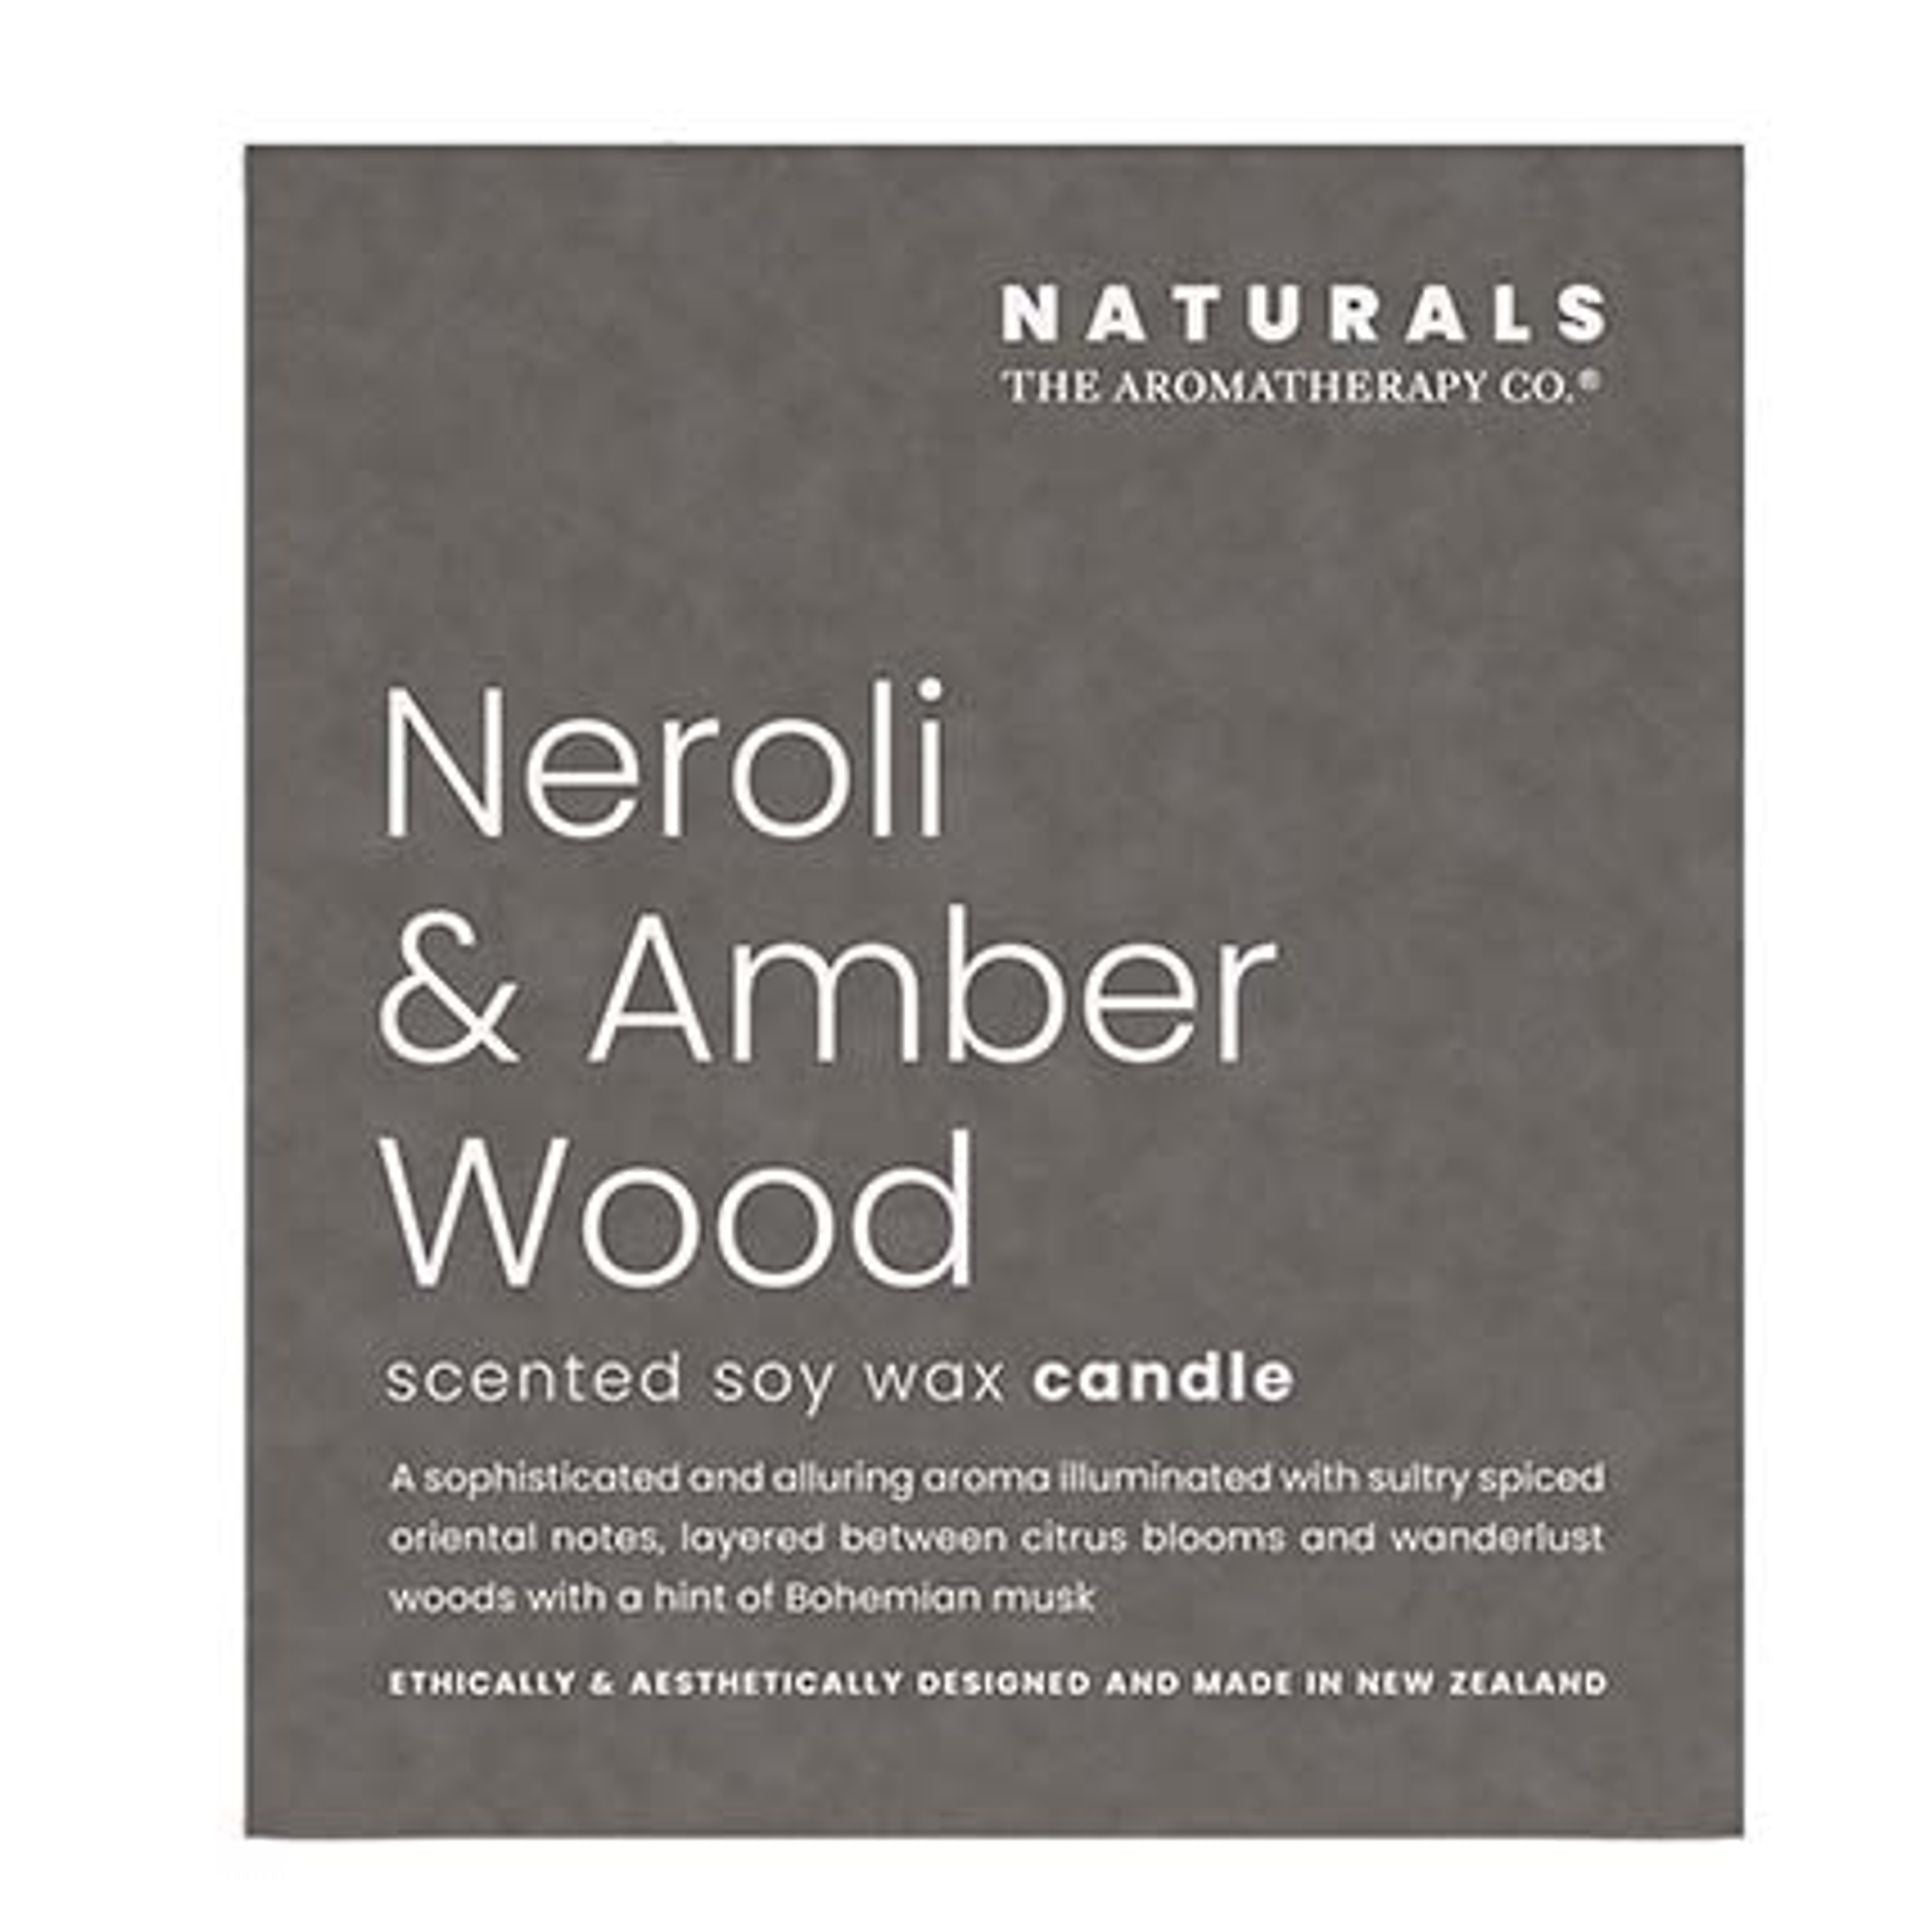 The Aromatherapy Co Naturals Neroli & Amber Wood Candle